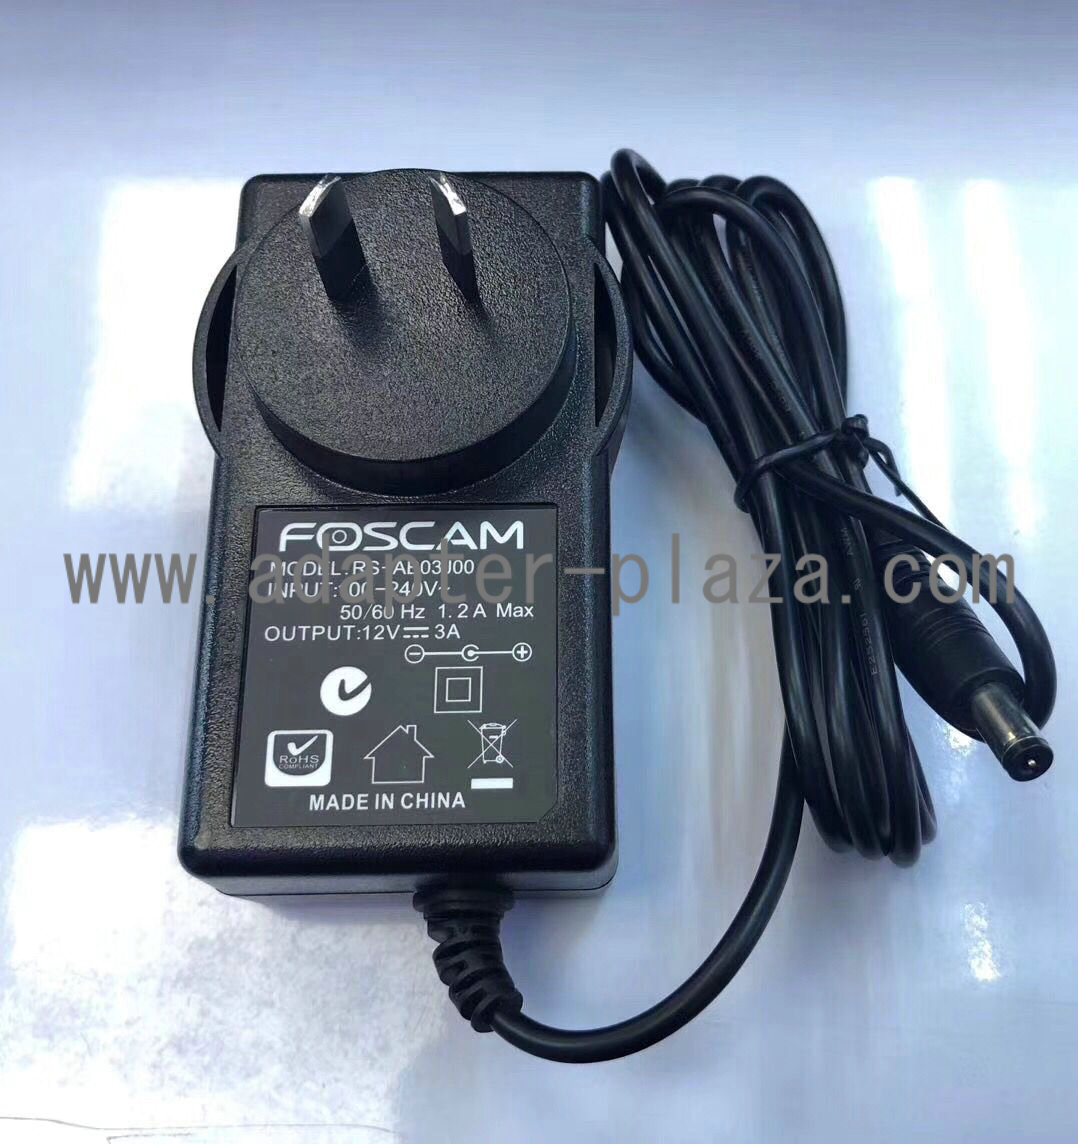 *Brand NEW* FOSCAM RS-AB03J00 12V 3A AC DC Adapter POWER SUPPLY